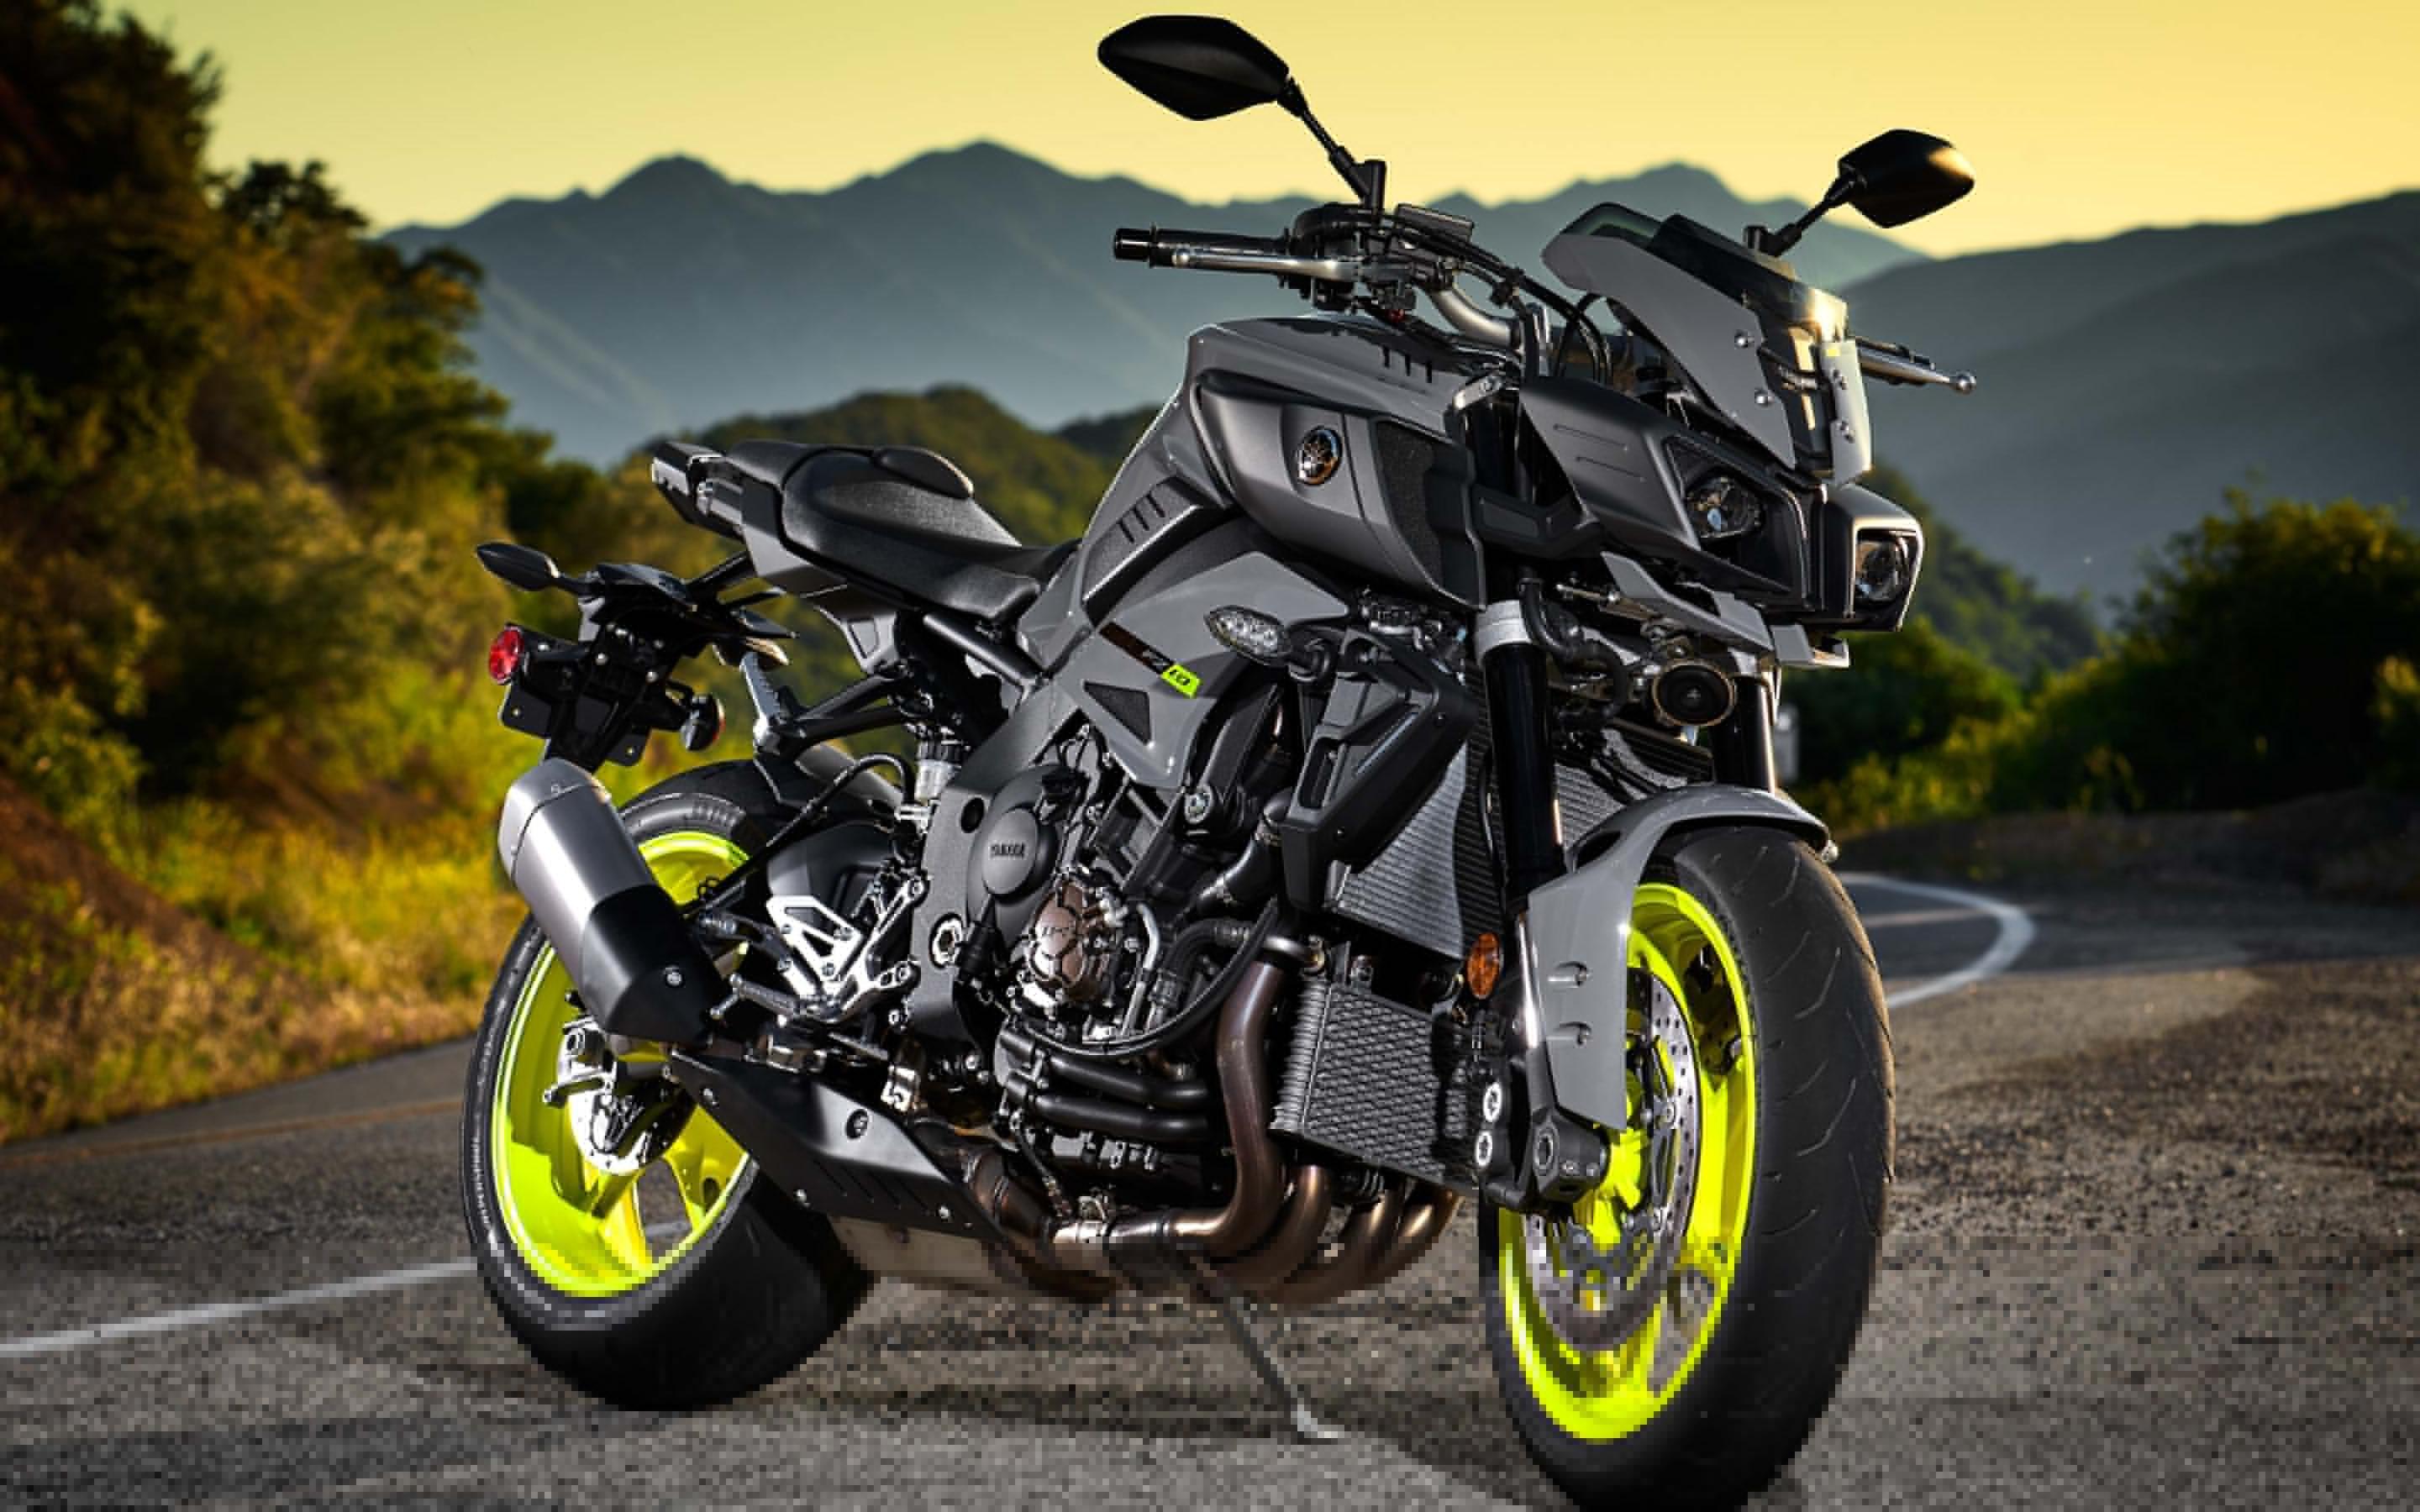 Black Yamaha YZFR1 Motorcycle 4K 5K HD Yamaha Wallpapers  HD Wallpapers   ID 95355